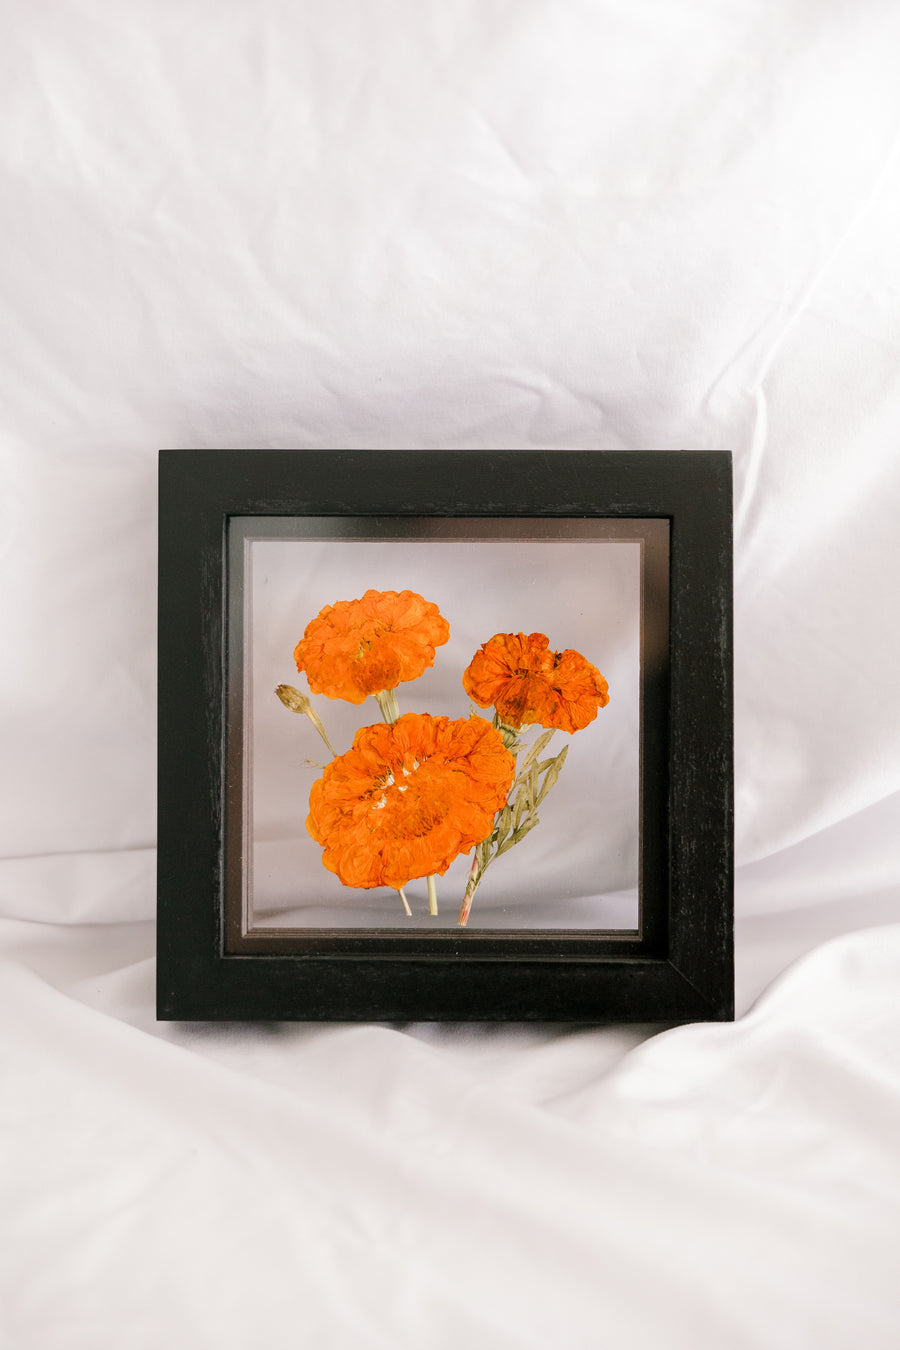 6x6 Marigold birth flower frame - October